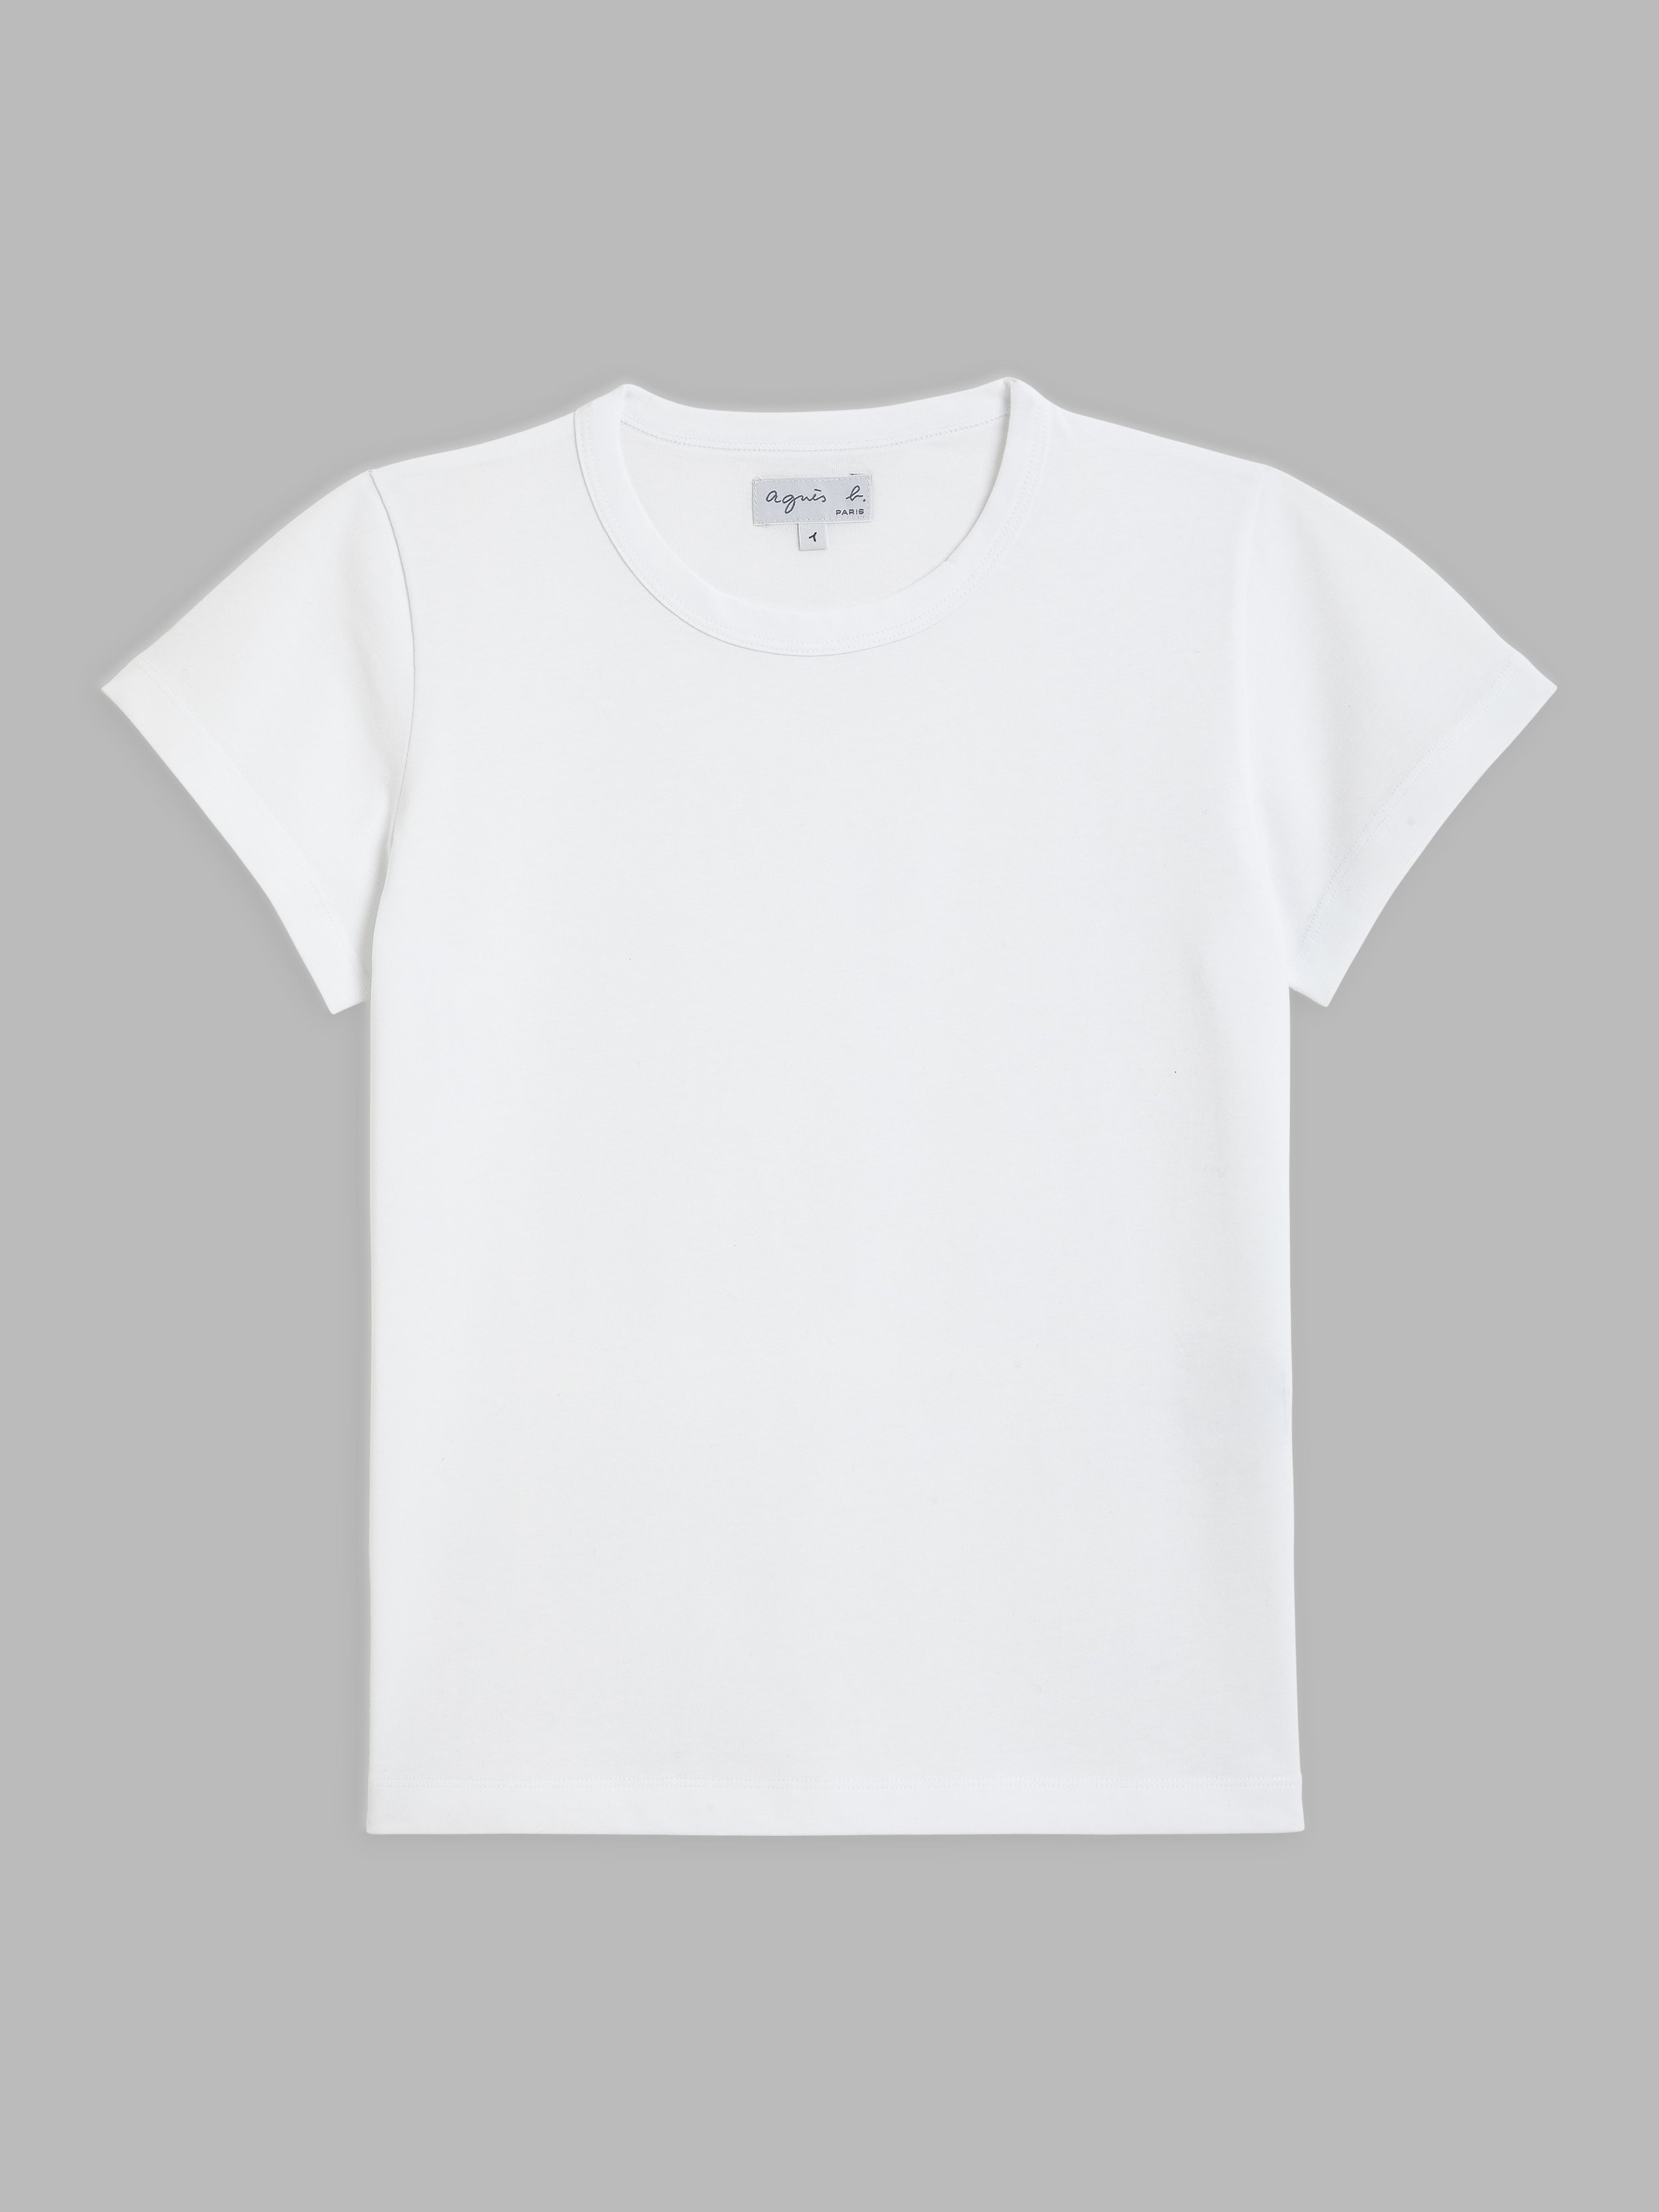 Dreigend Terughoudendheid Nuttig white short sleeves Brando t-shirt | agnès b.